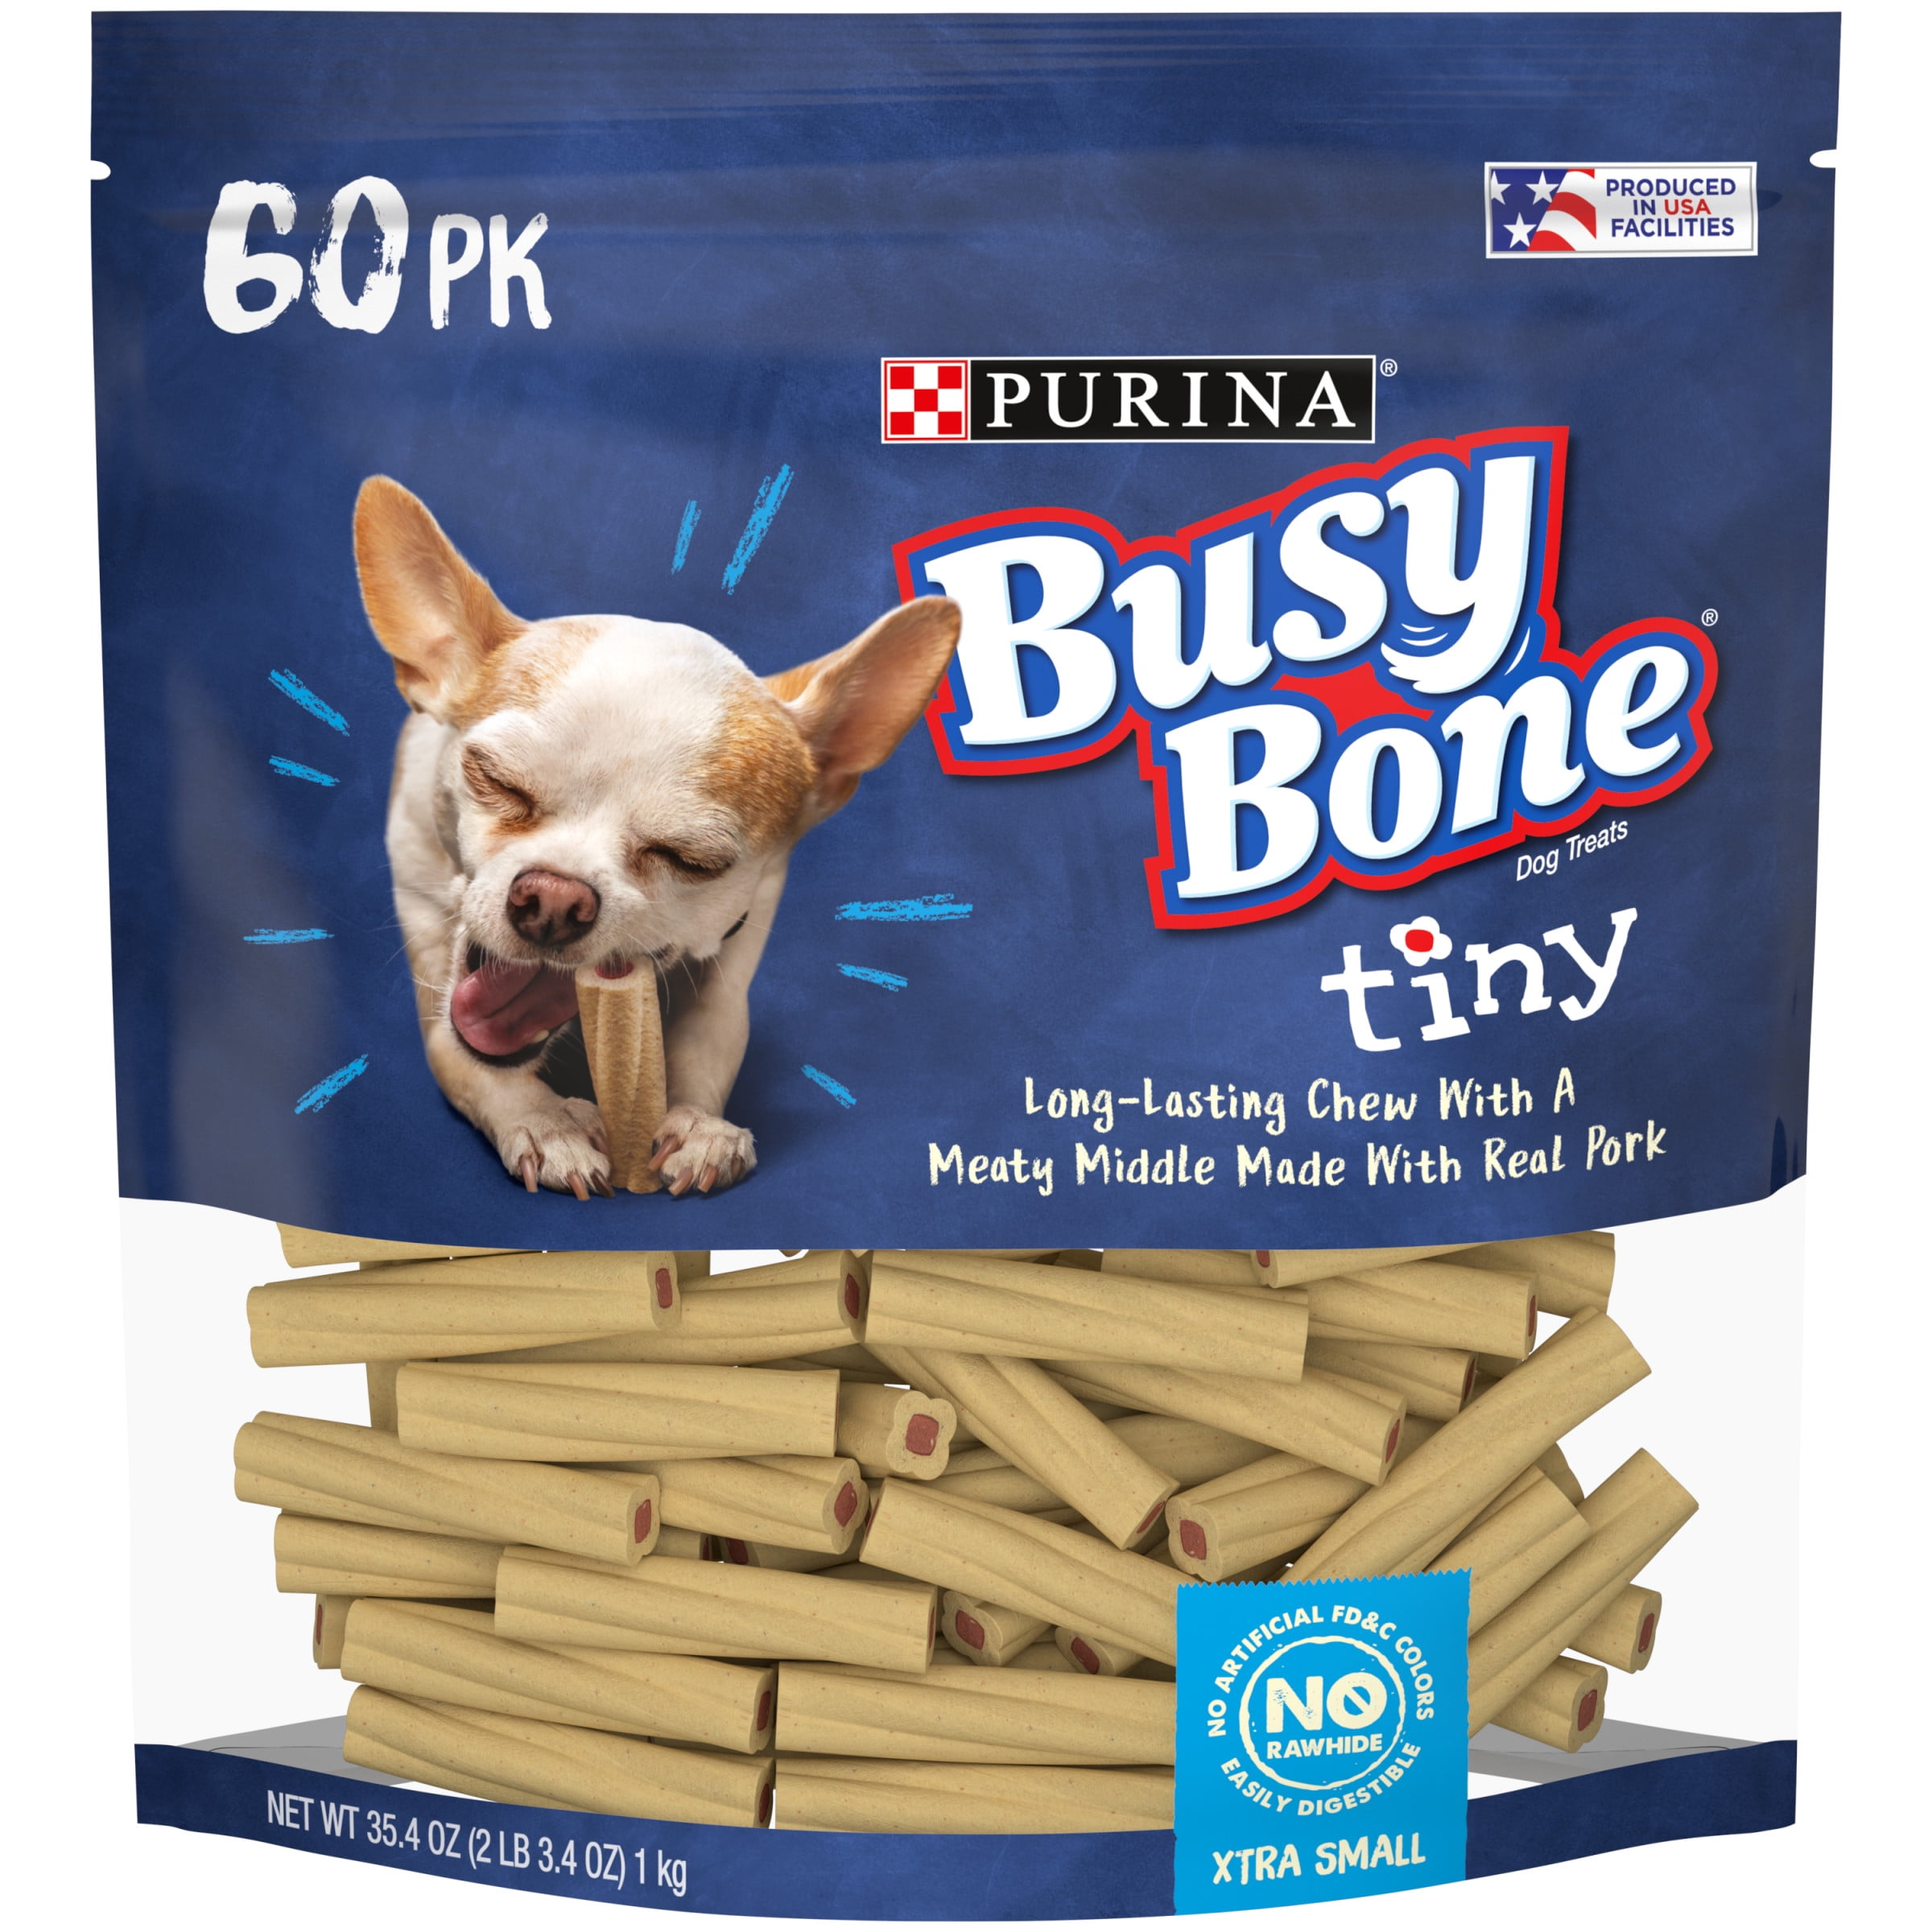 Bone-Appetite !! Chihuahua Long Hair Dog 29'' x 29" Flour Sack Towels 